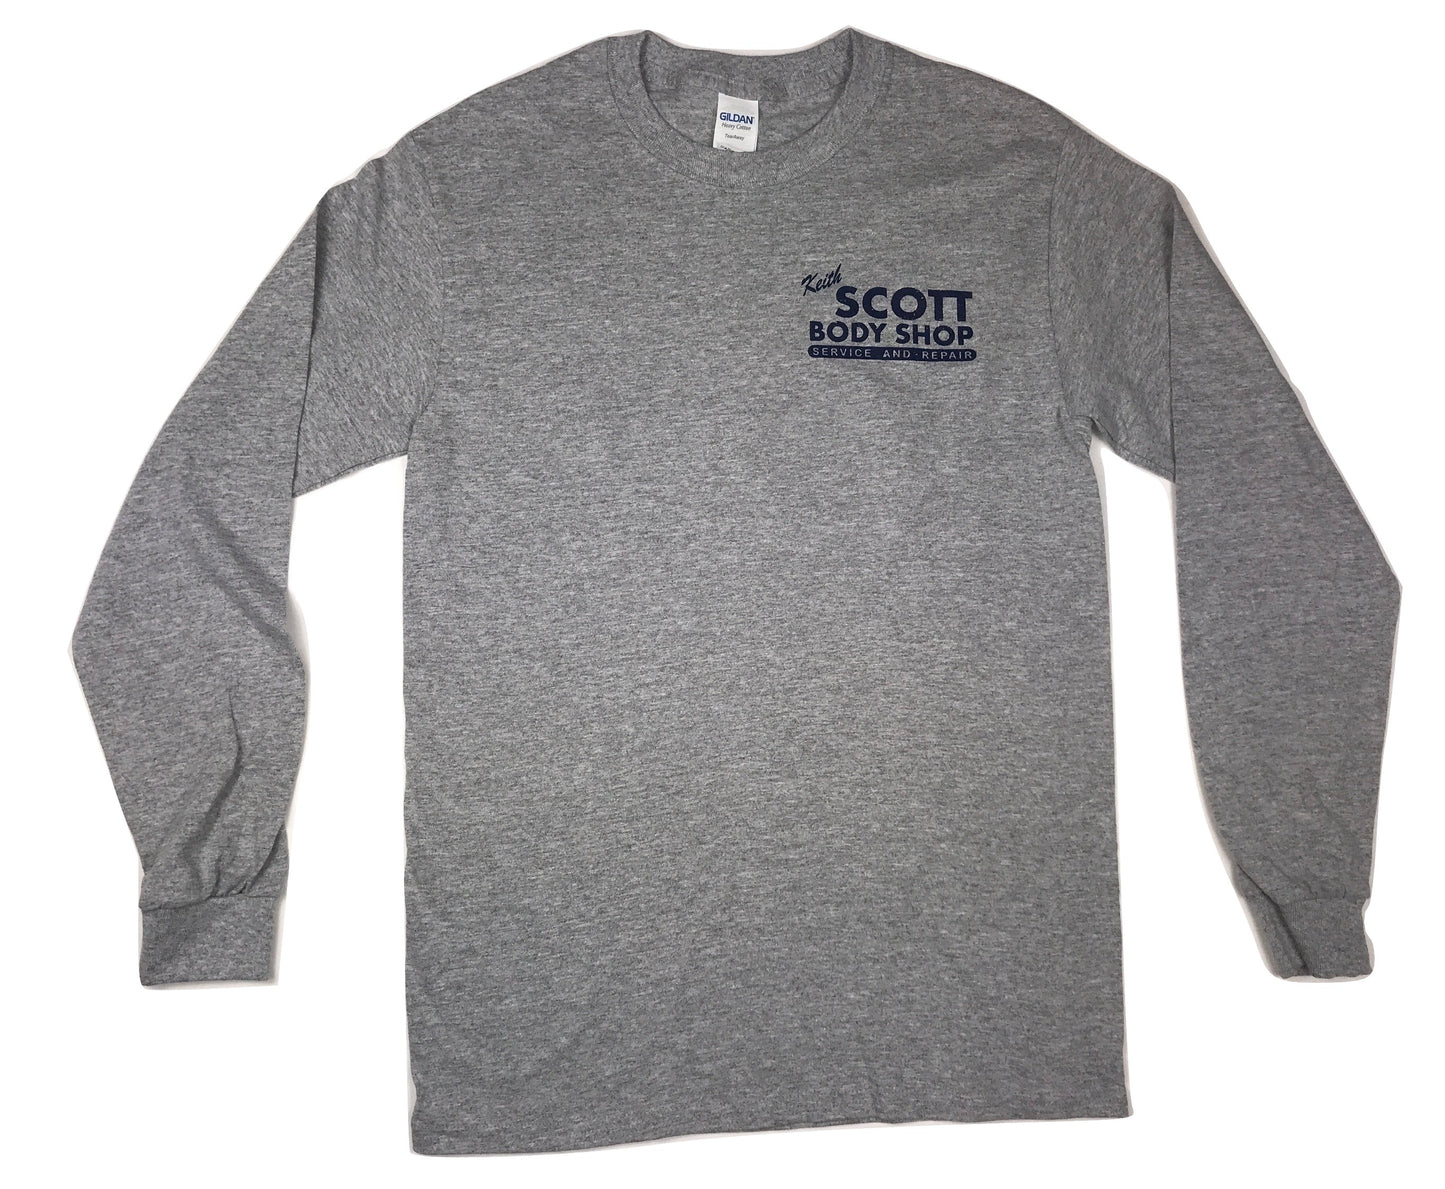 Keith Scott Body Shop – Long Sleeve– Sport Grey